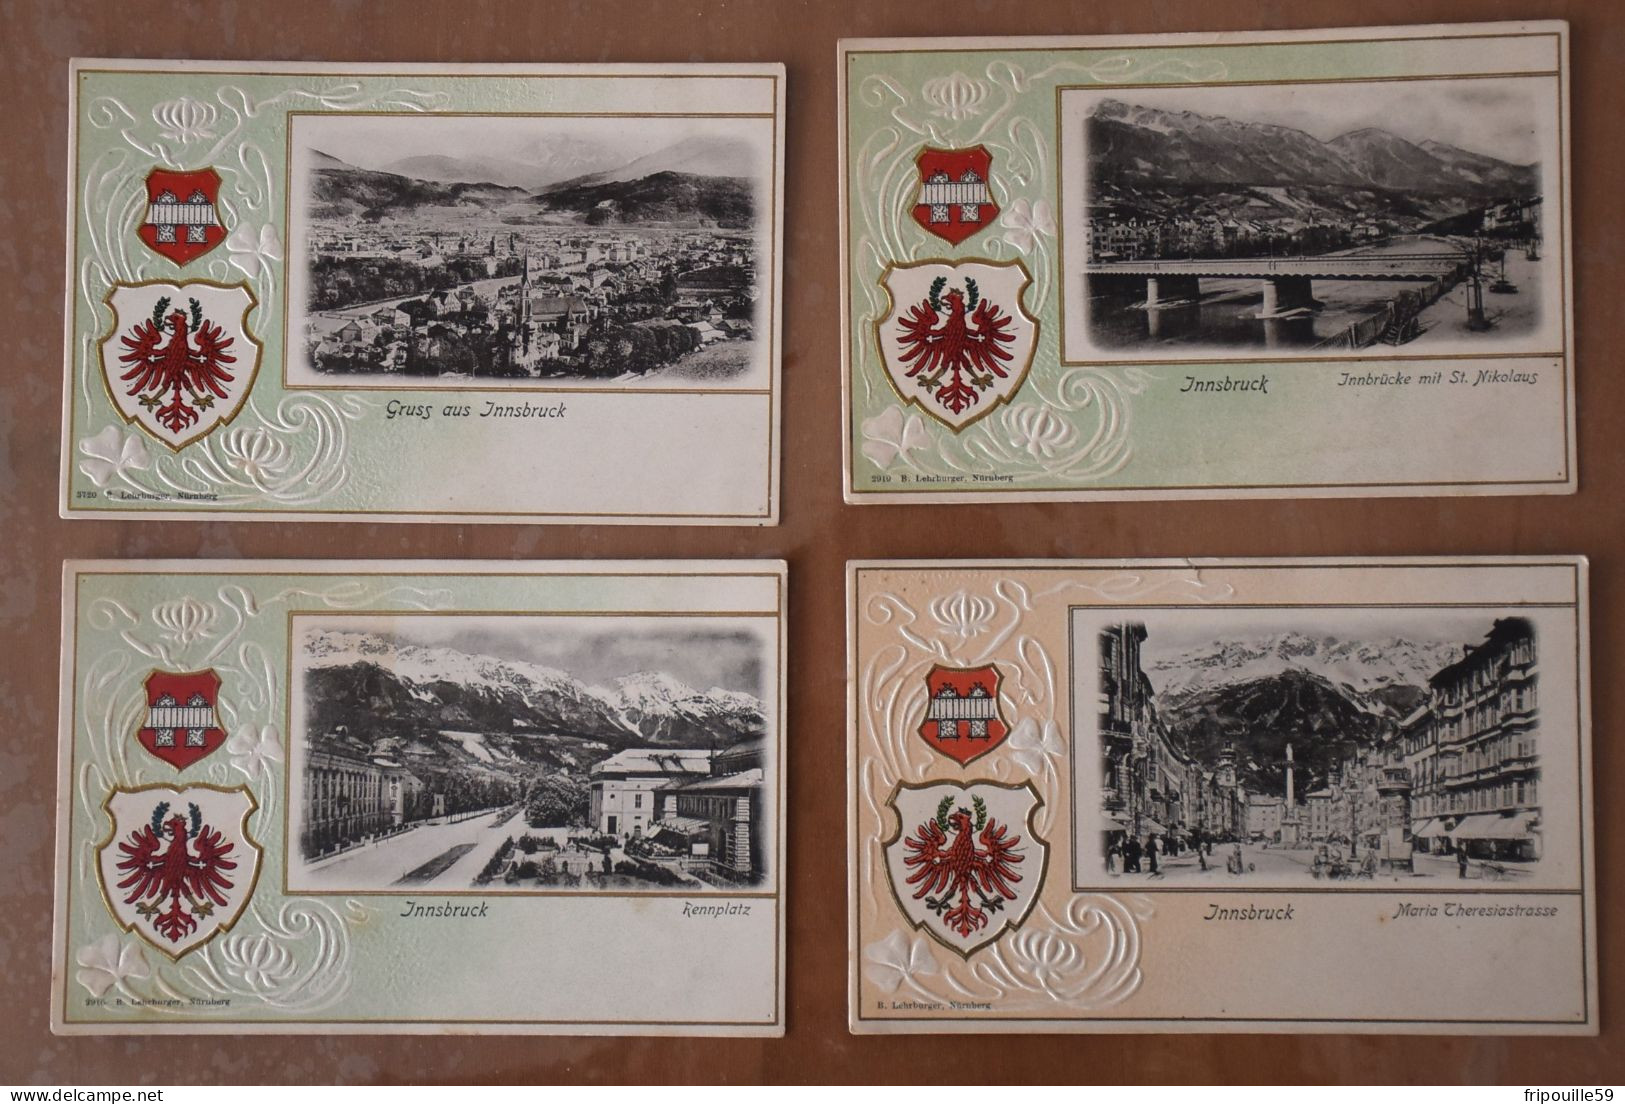 Innsbruck - Lot De 4 Cartes - Ed. E. Lehrburger, Nürnberg - Non Circulé - 1900! - Innsbruck